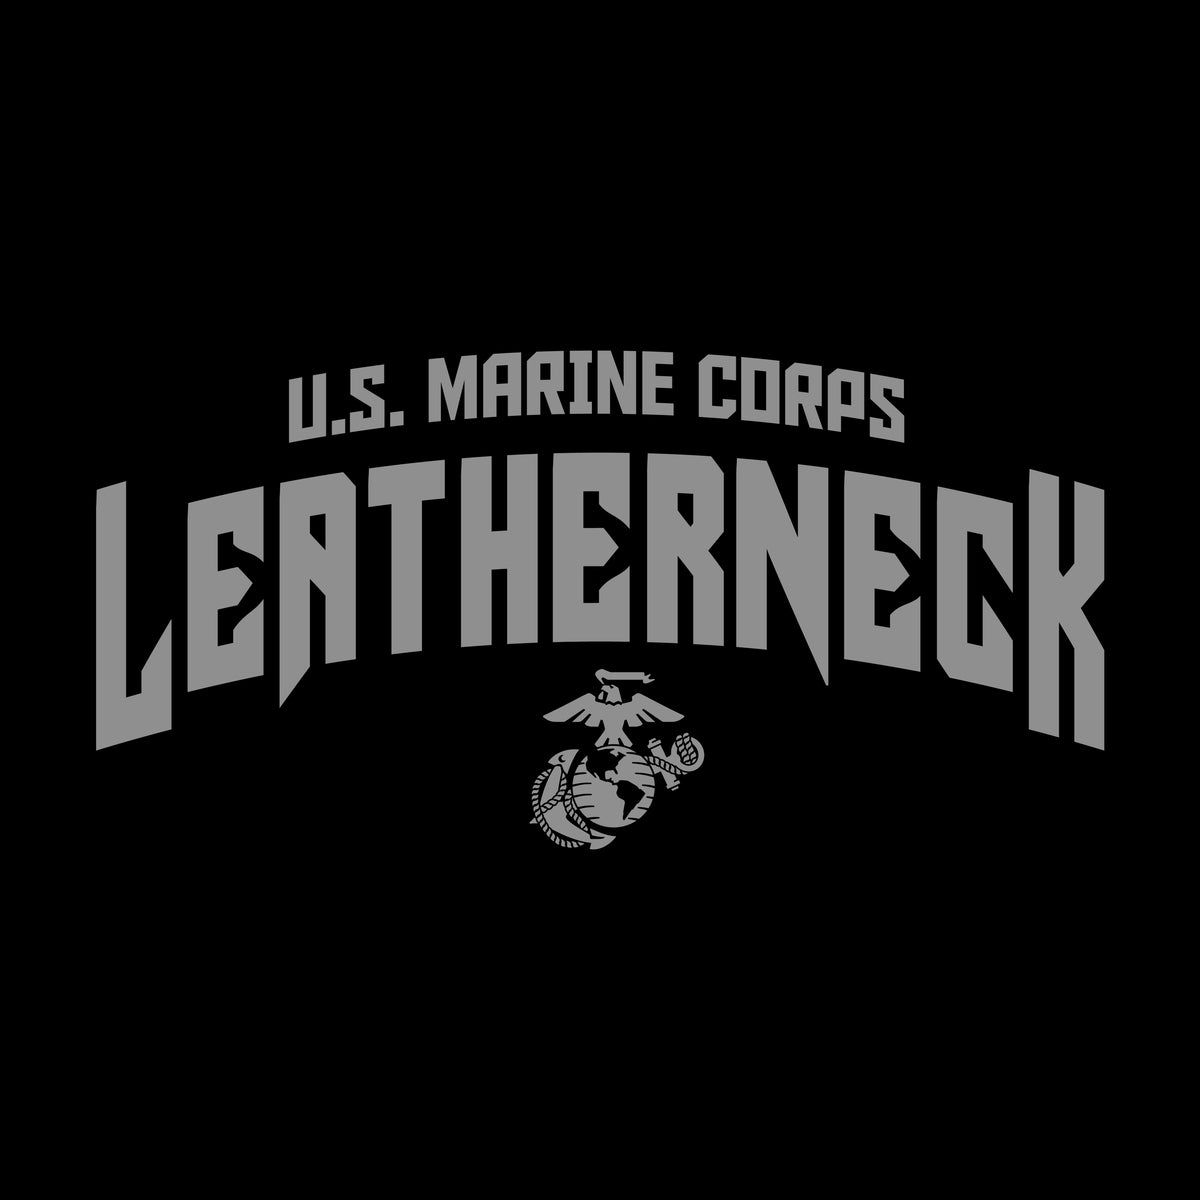 Marines Leatherneck Zero Dark Thirty Sweatshirt